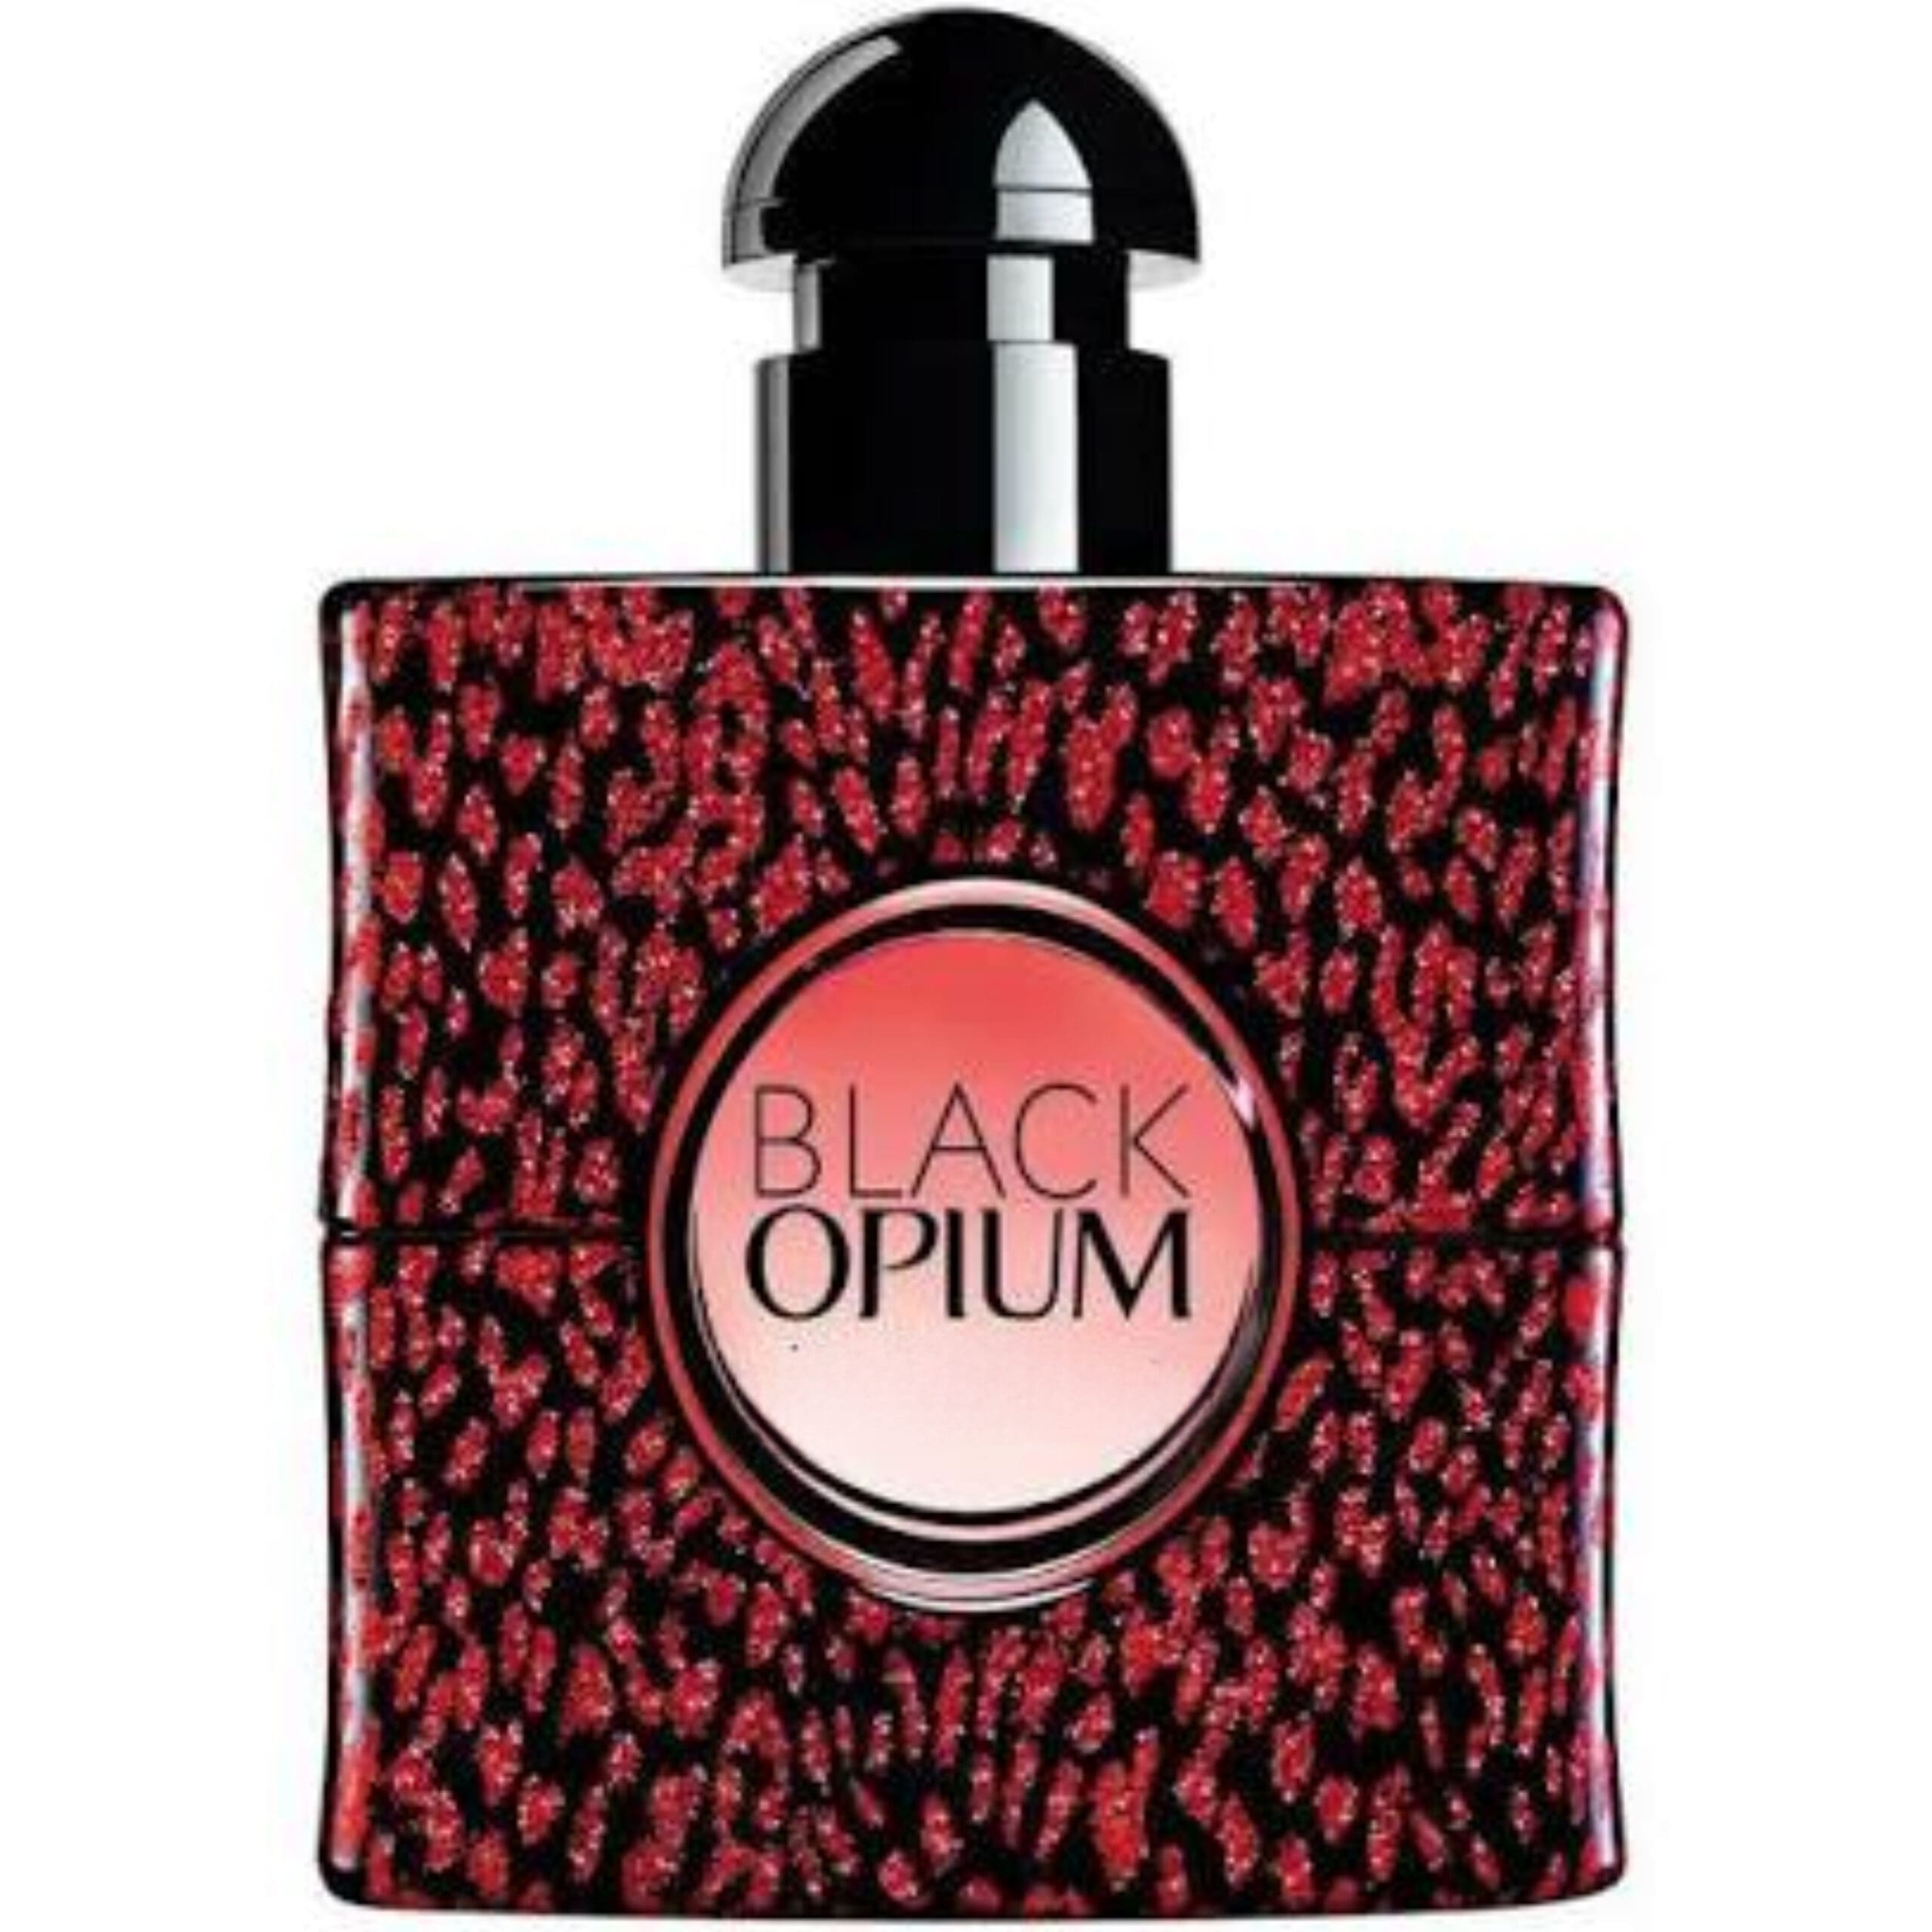 3159 Black Opium limited edition EDP 90ml